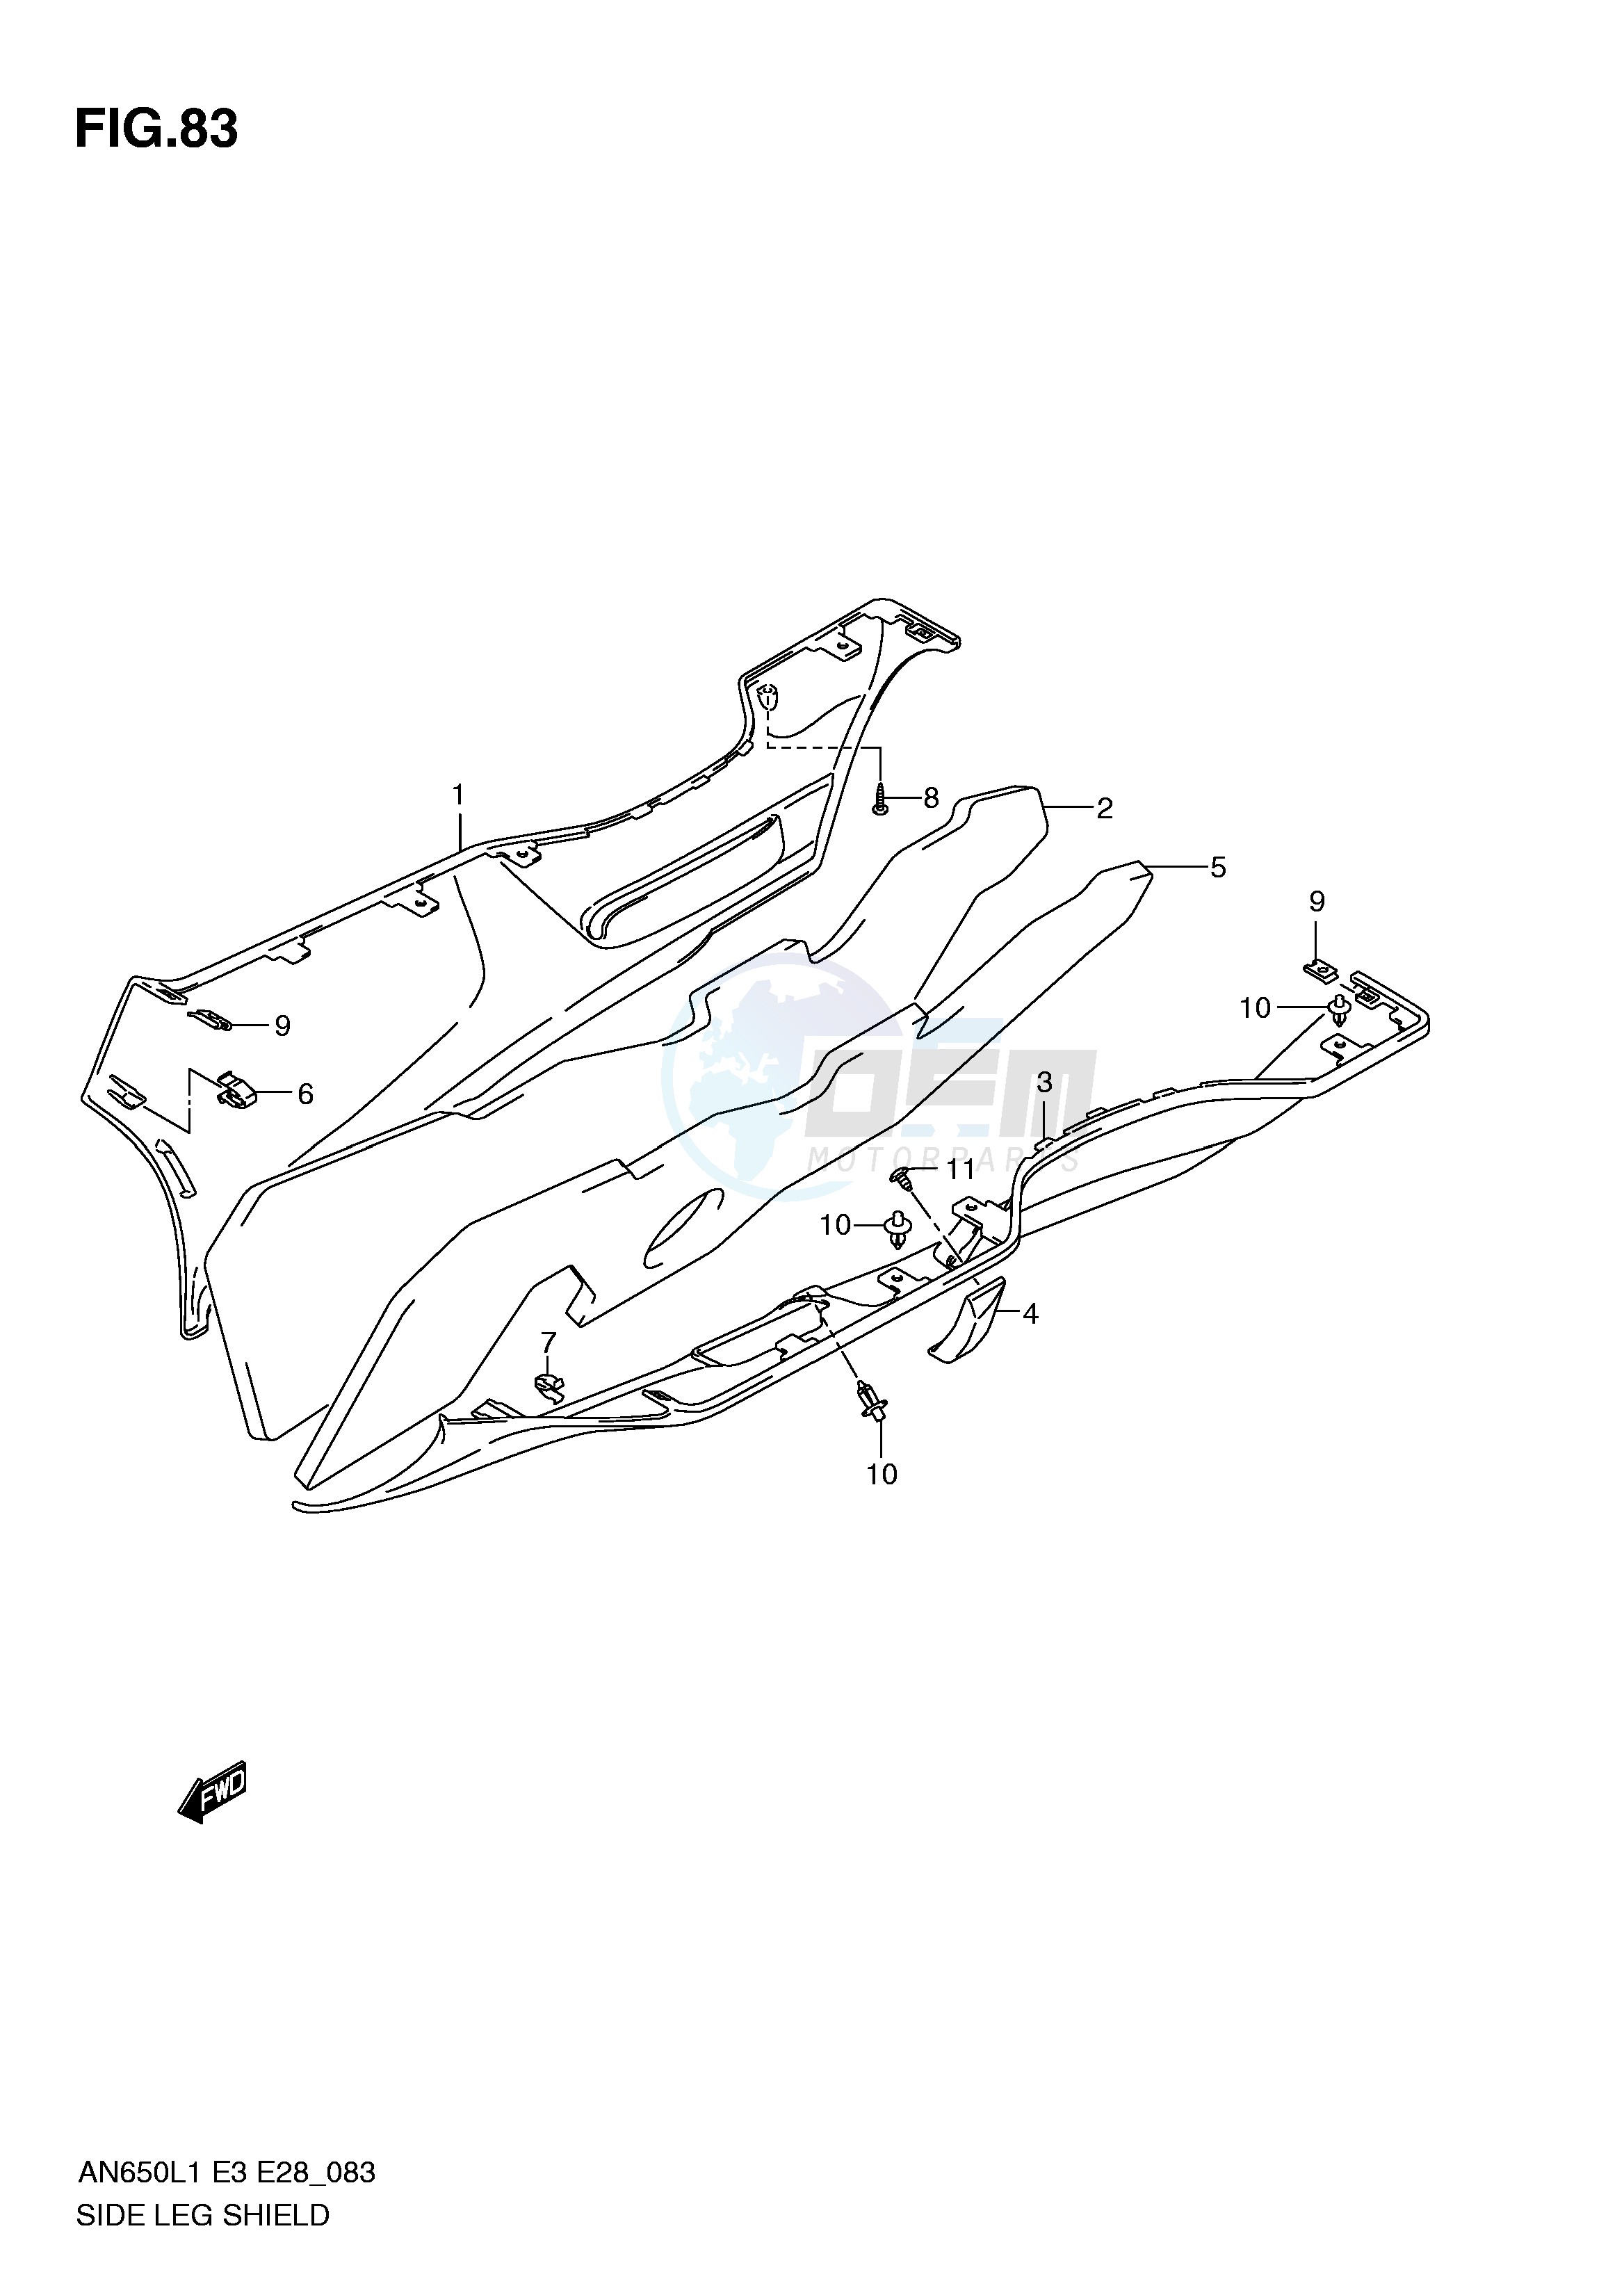 SIDE LEG SHIELD (AN650L1 E3) blueprint